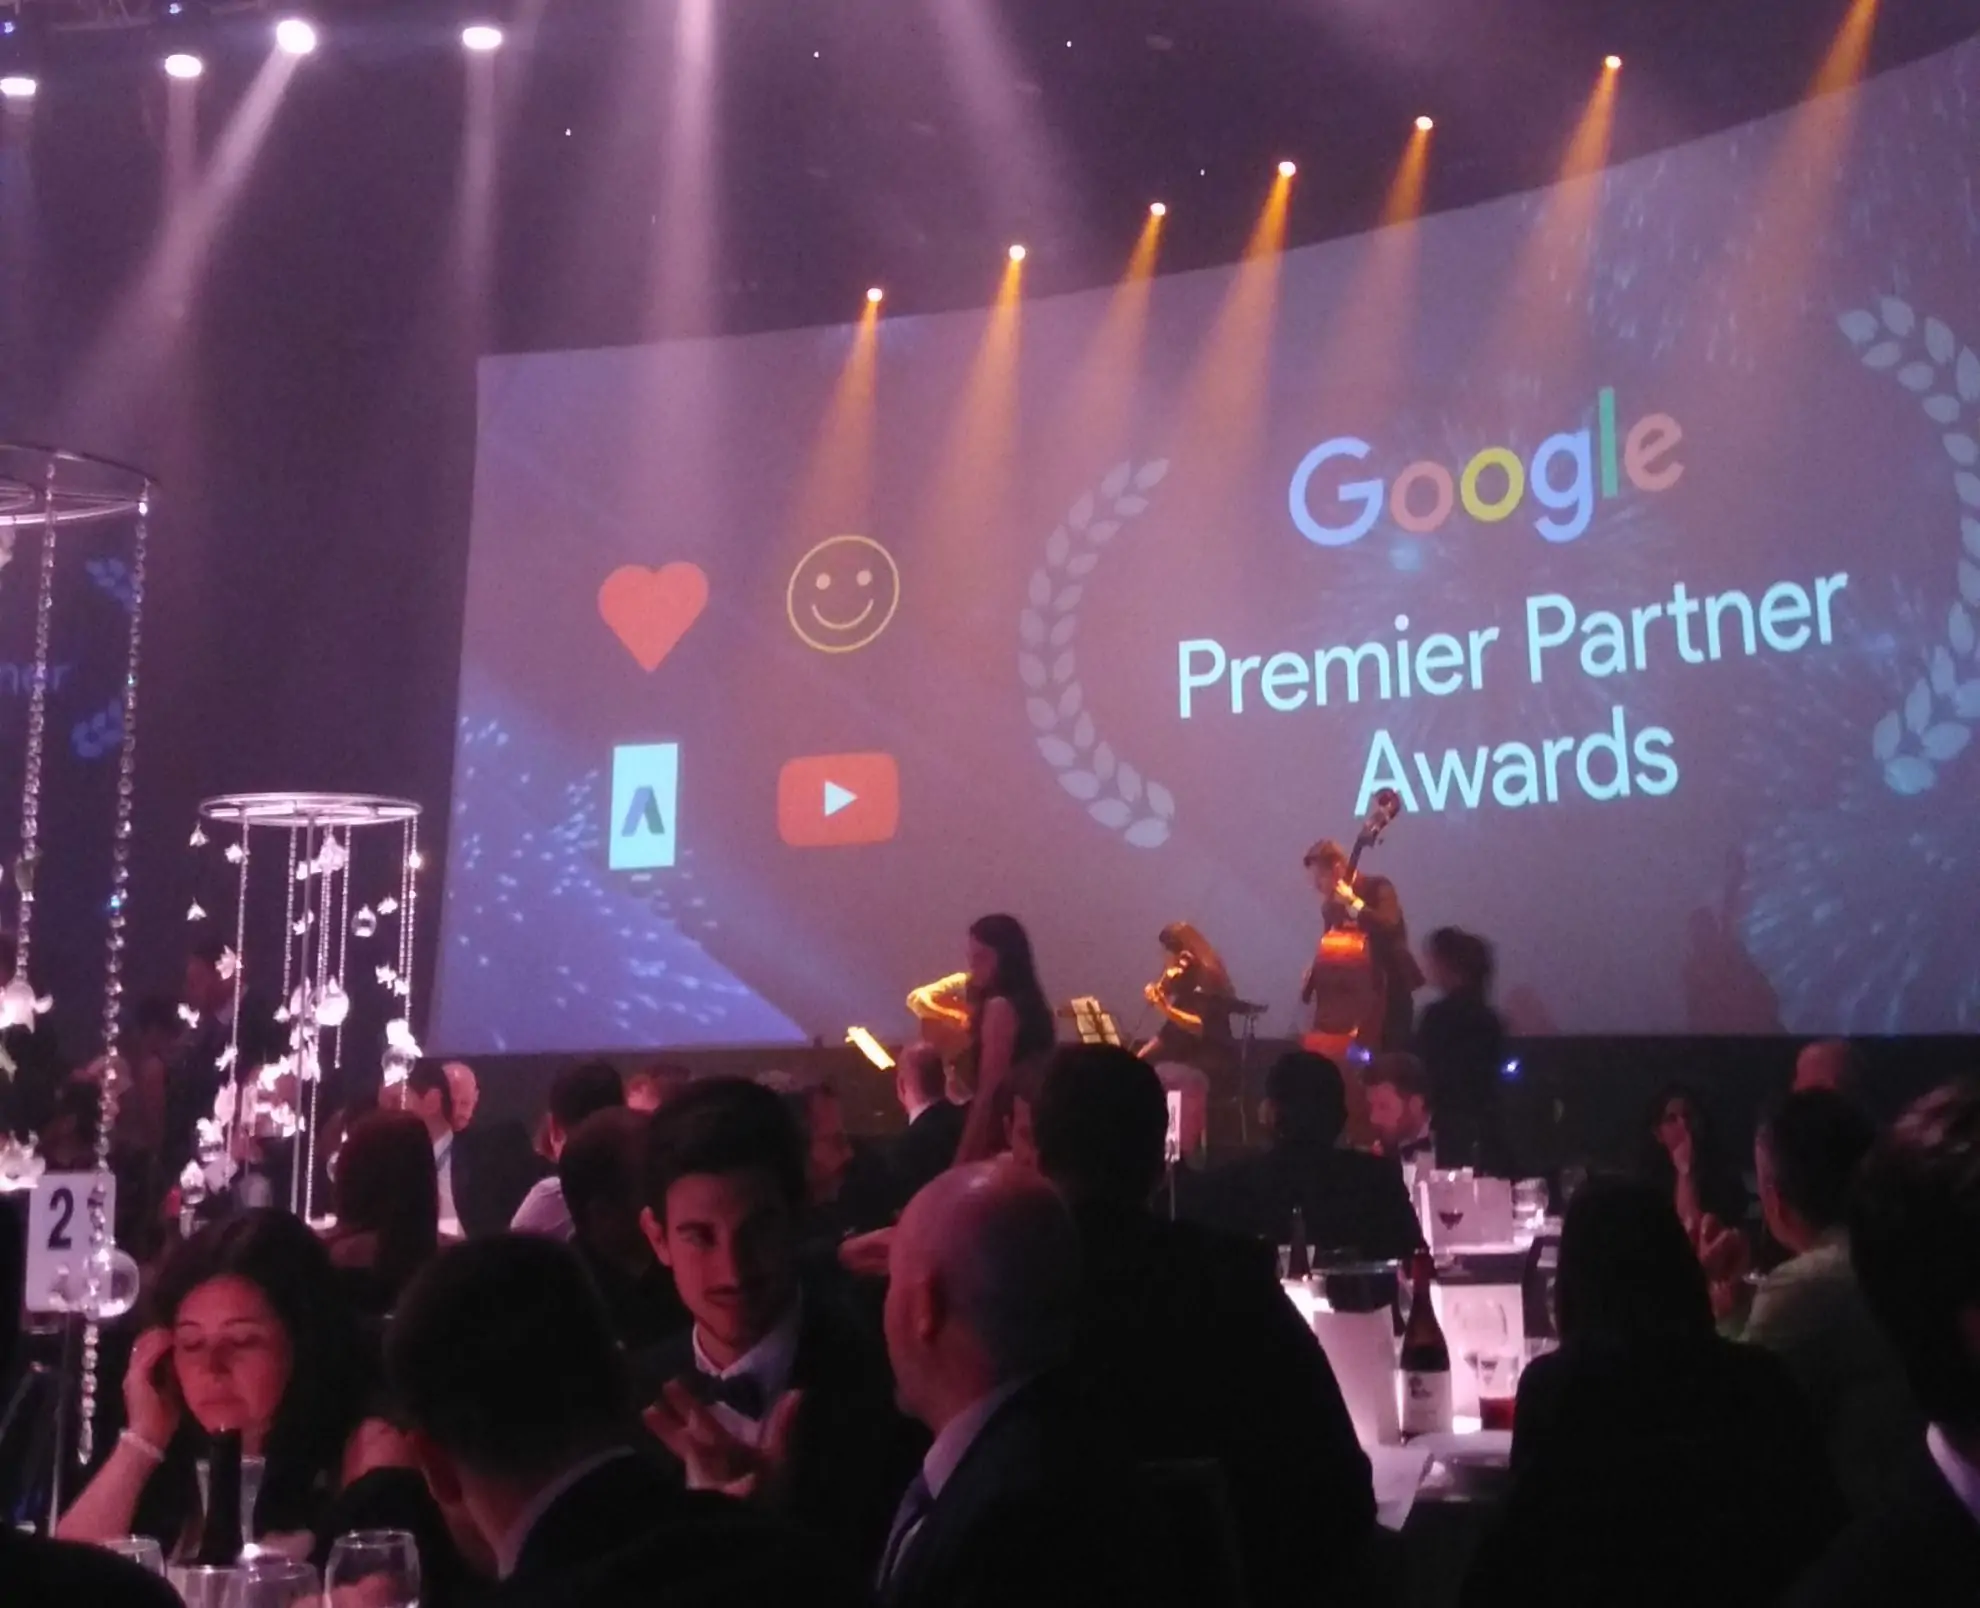 Google Premier Partner Awards 2016 Dublín